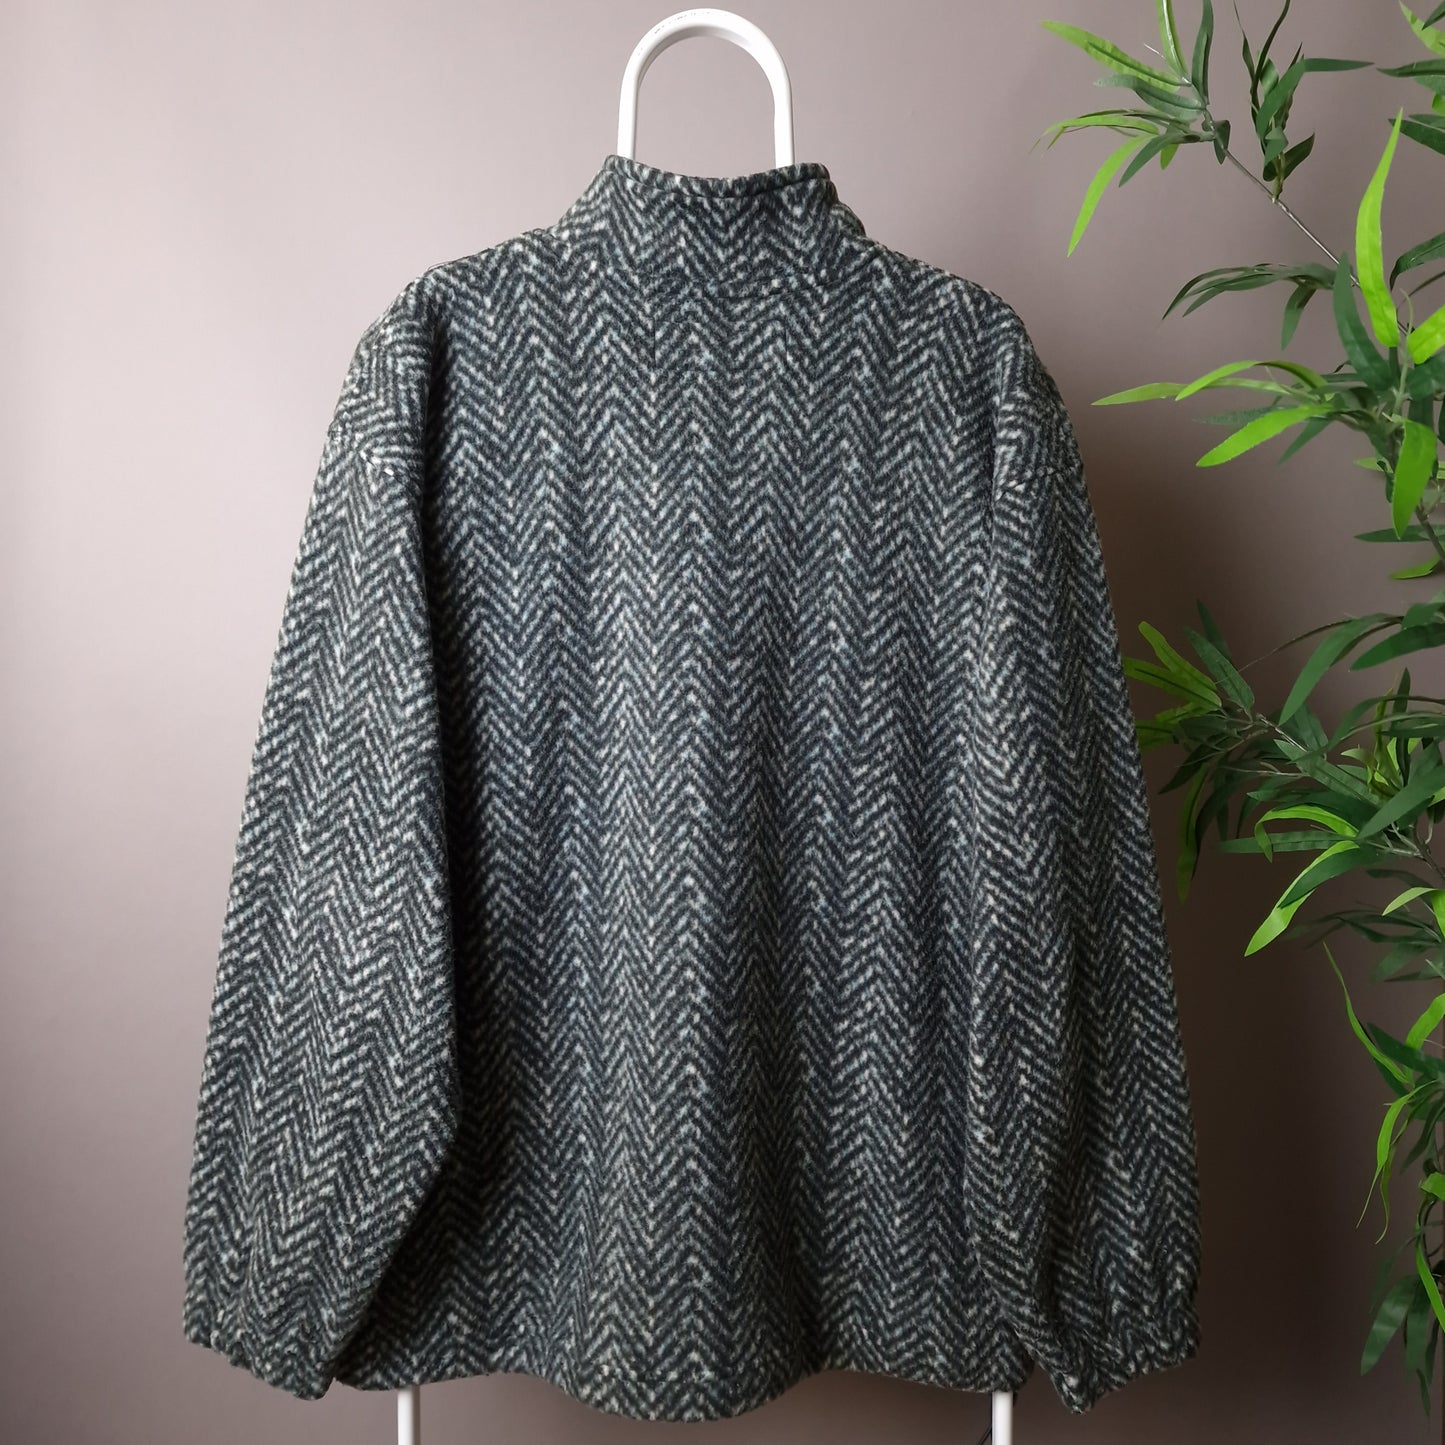 Vintage Invicta patterned fleece  in grey- XL